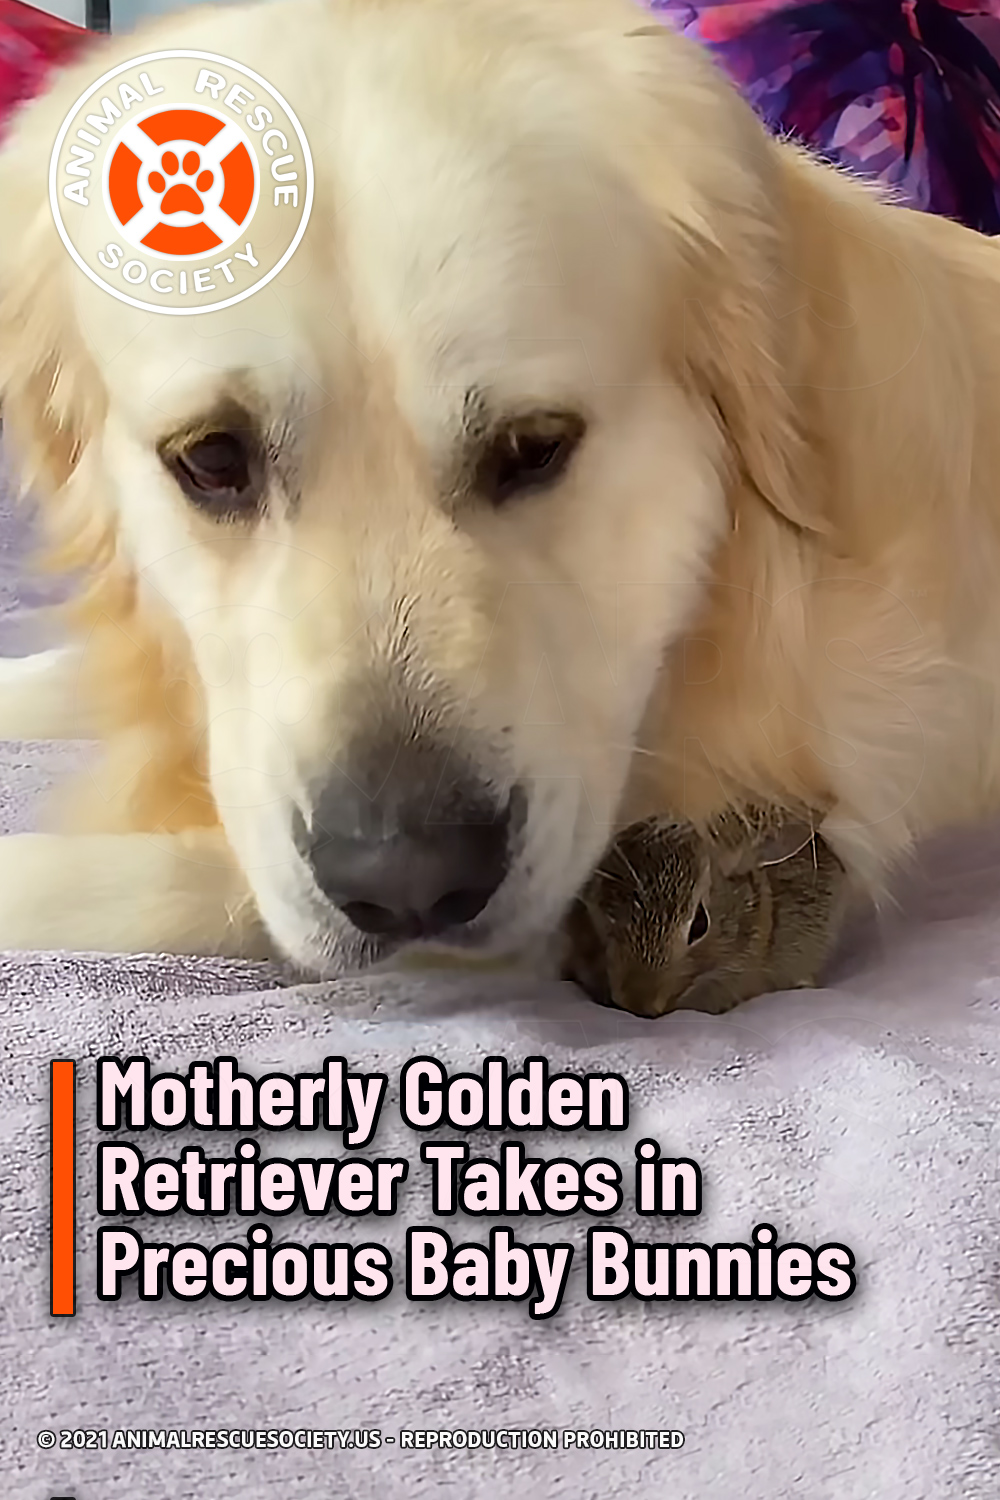 Motherly Golden Retriever Takes in Precious Baby Bunnies